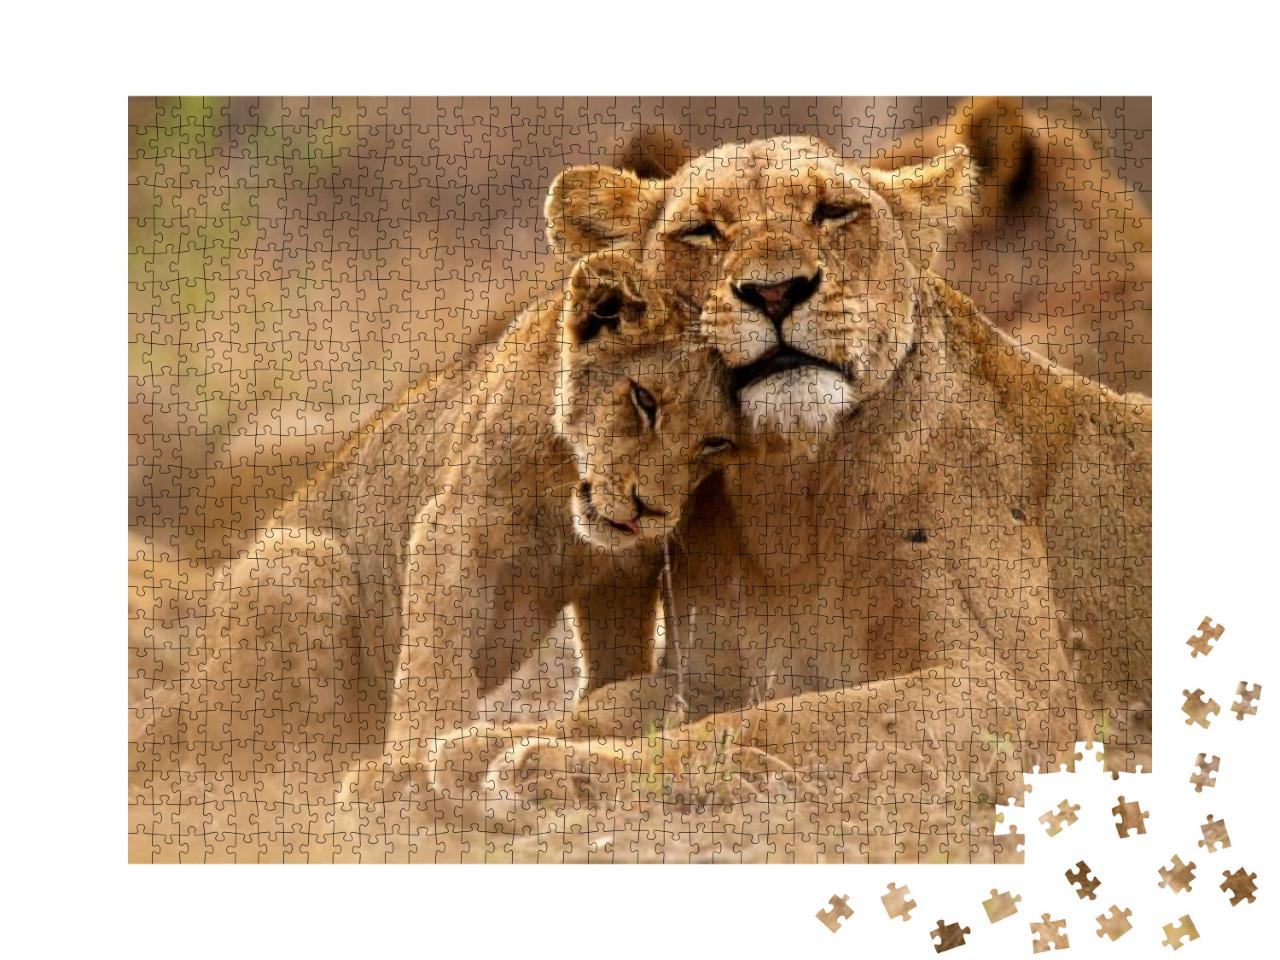 Puzzle 1000 Teile „Löwin und Jungtier im Kruger National Park, Südafrika“